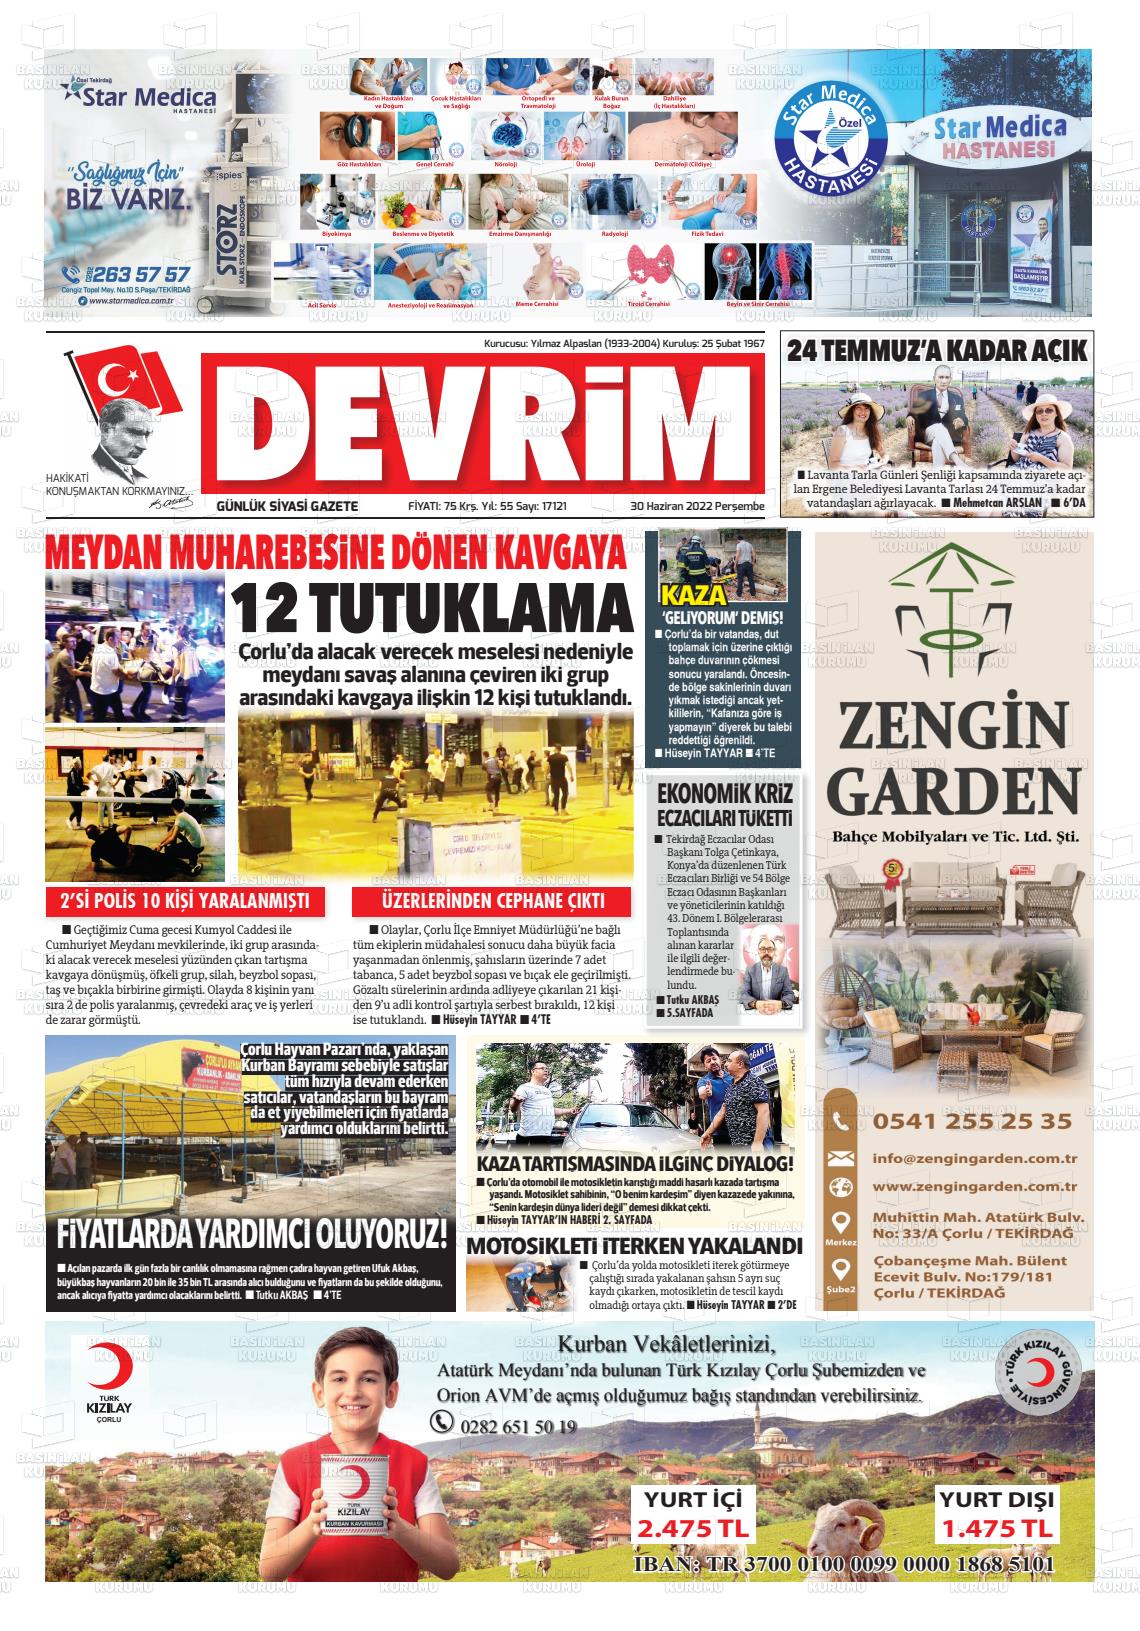 02 Temmuz 2022 Devrim Gazete Manşeti